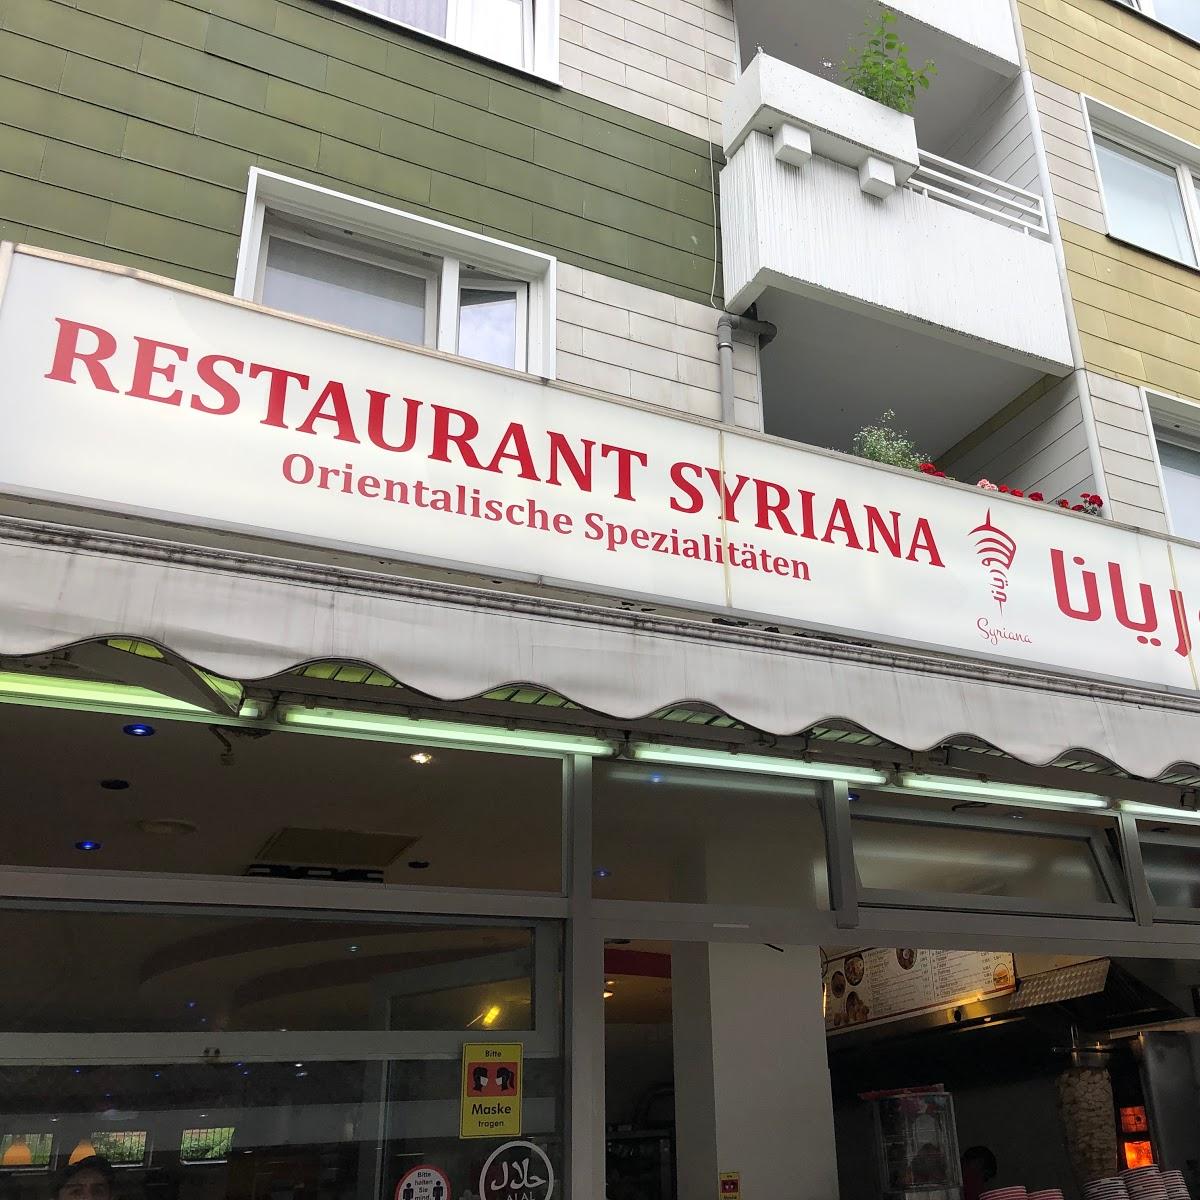 Restaurant "Syriana Restaurant" in  Herne